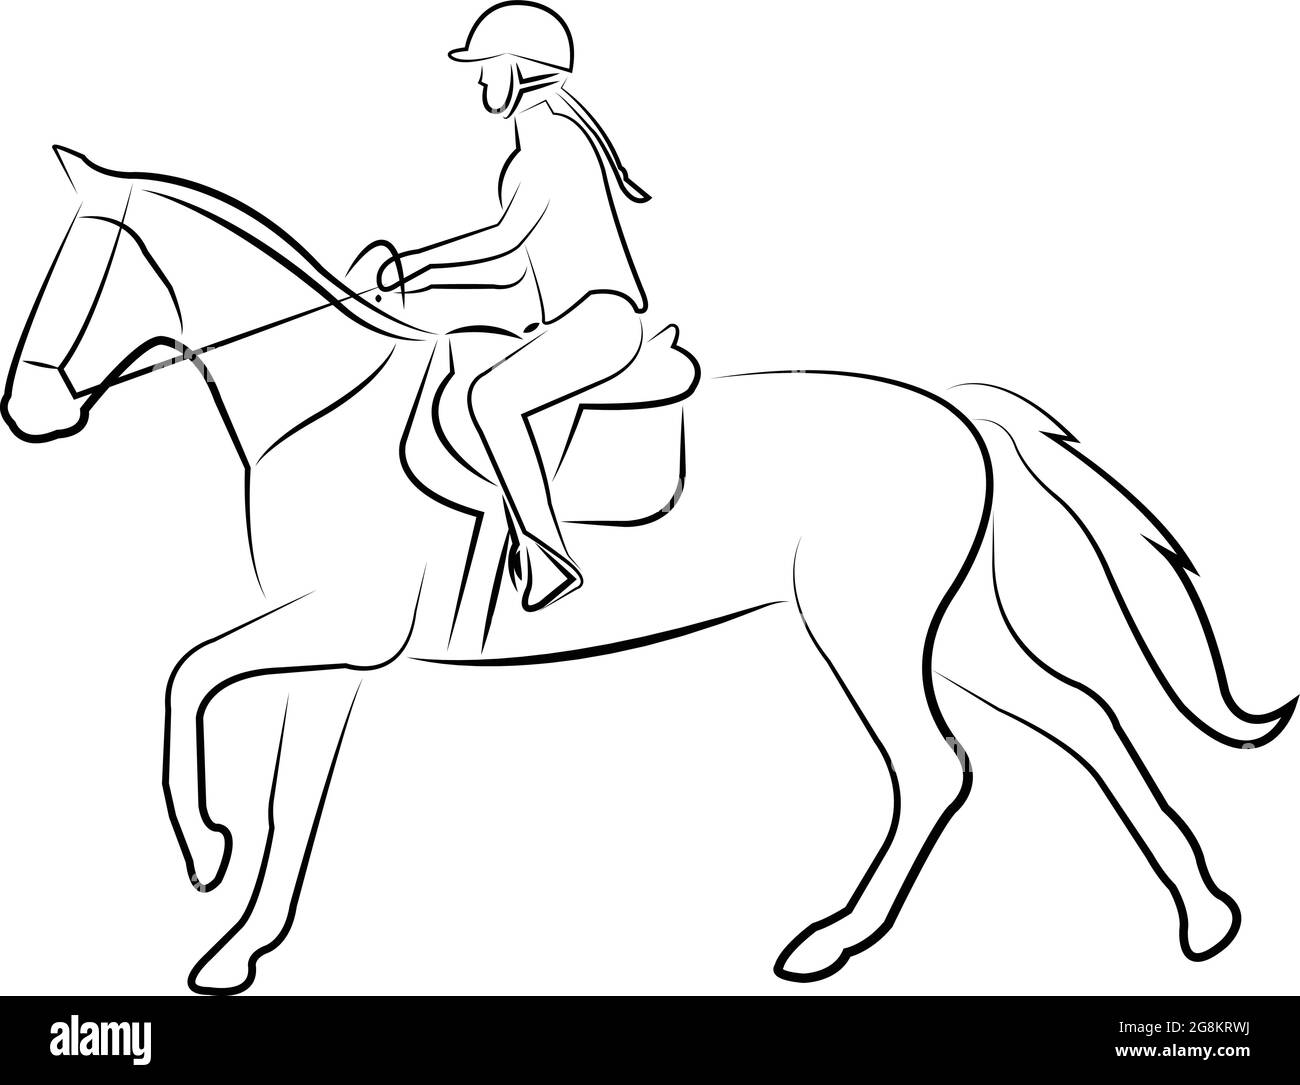 https://c8.alamy.com/comp/2G8KRWJ/horse-riding-line-art-vector-2G8KRWJ.jpg